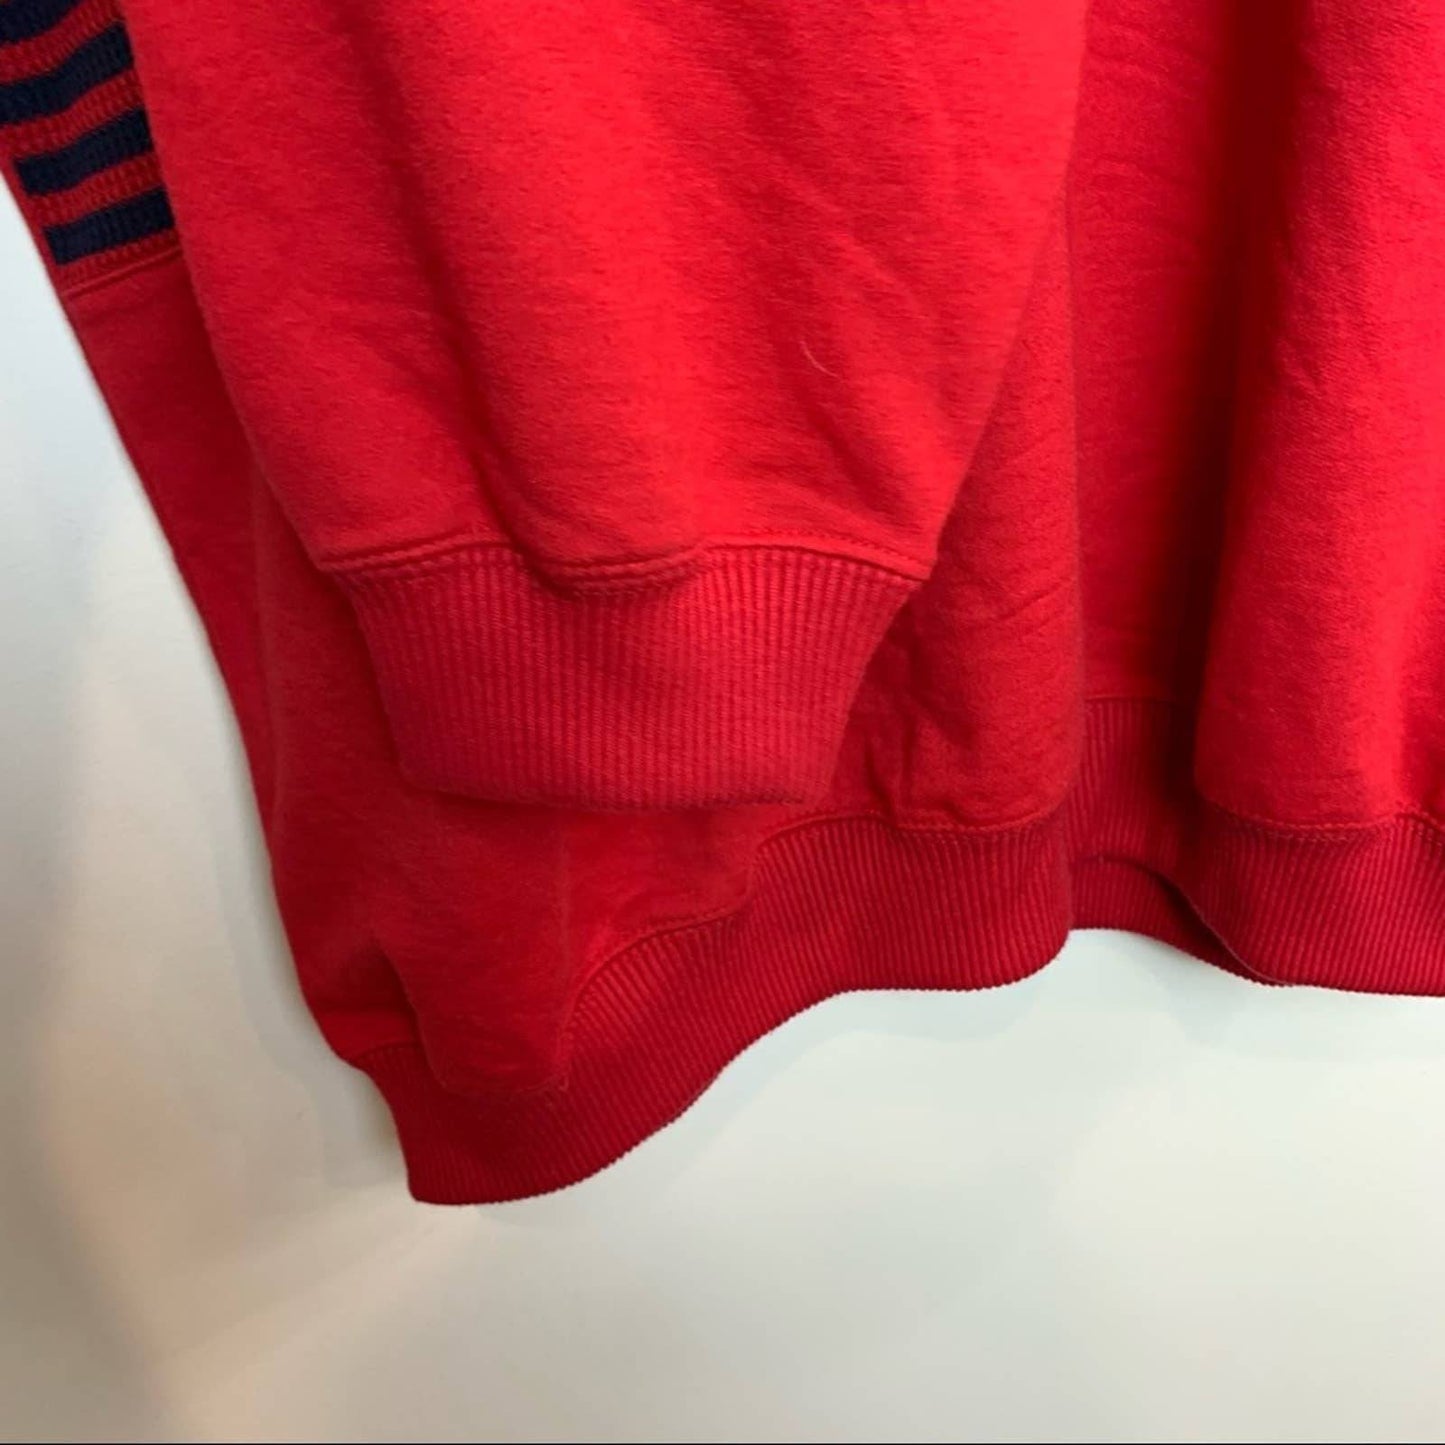 90s Pullover Sweatshirt Zipper Collared 90s 80s Bill Blast 1X Unisex Red